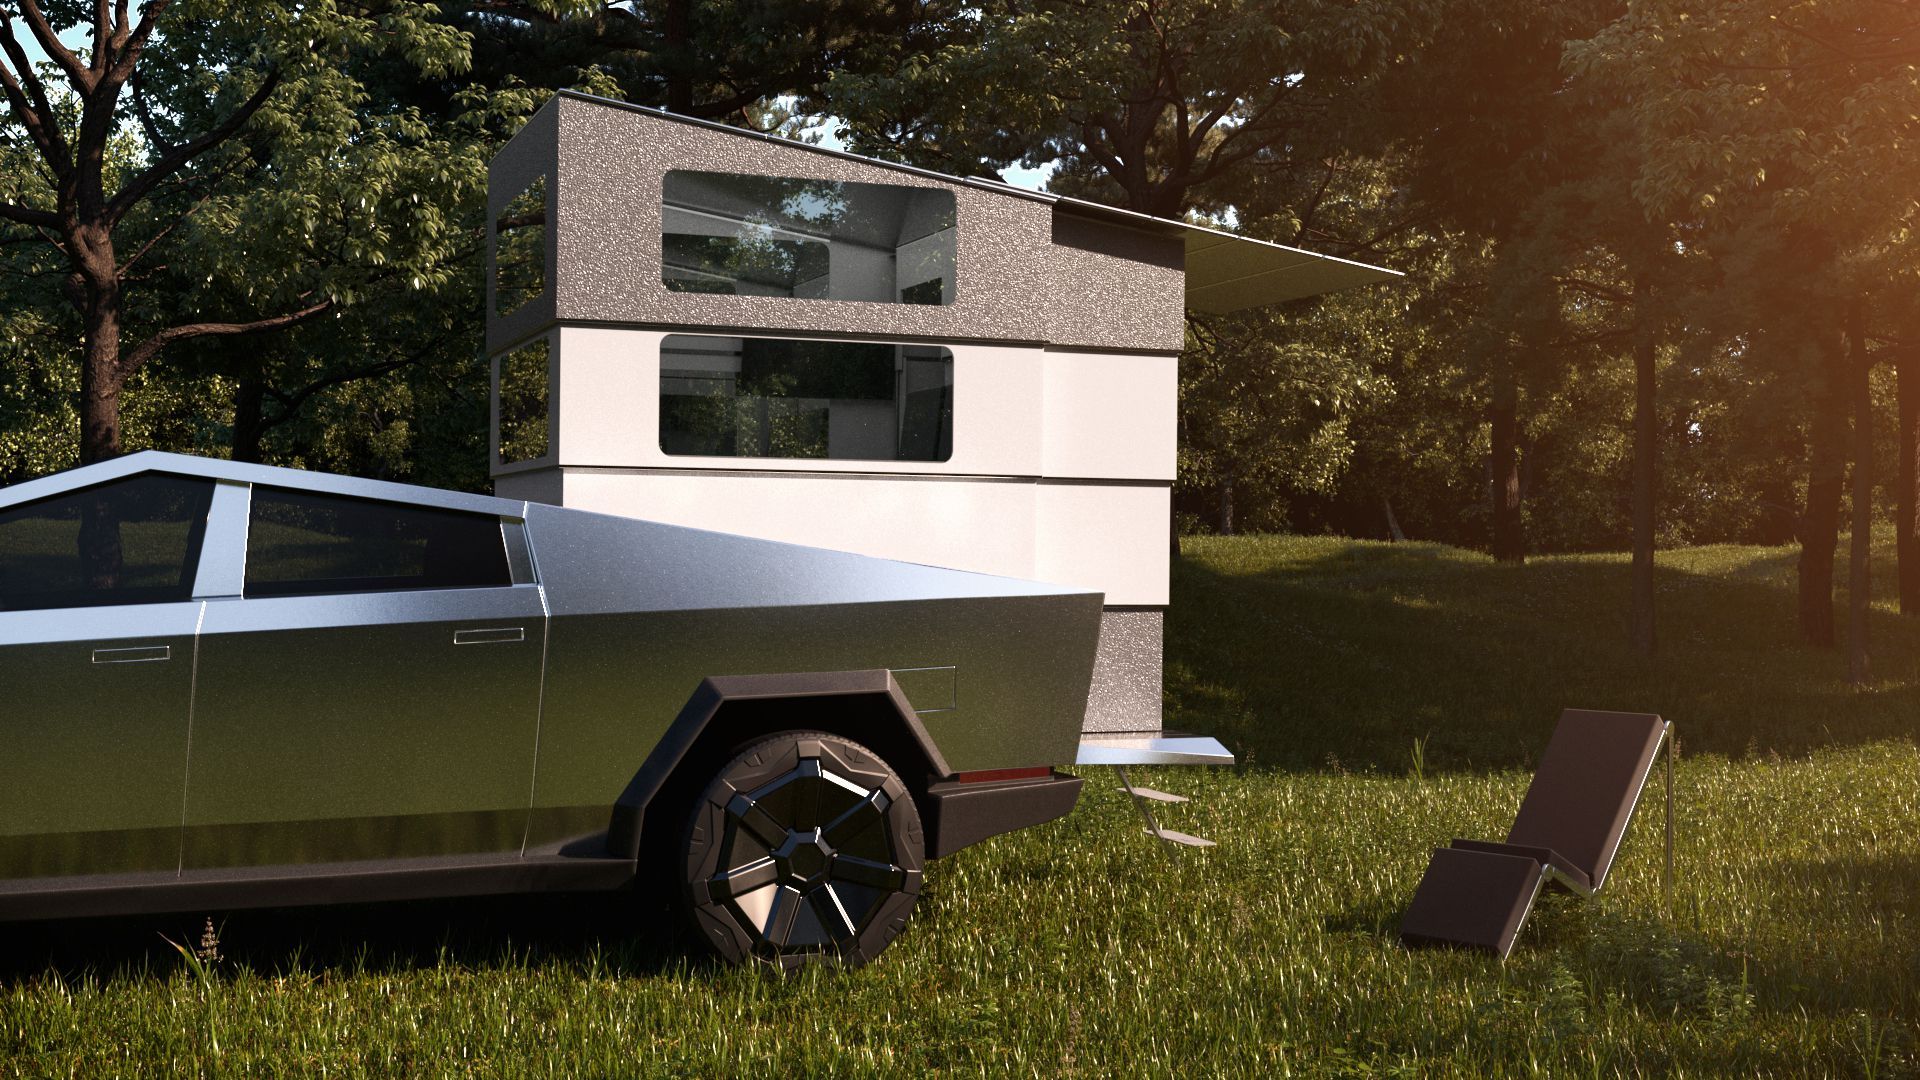 CyberLandr pop-up camper designed for Tesla's Cybertruck. Image courtesy of Stream It